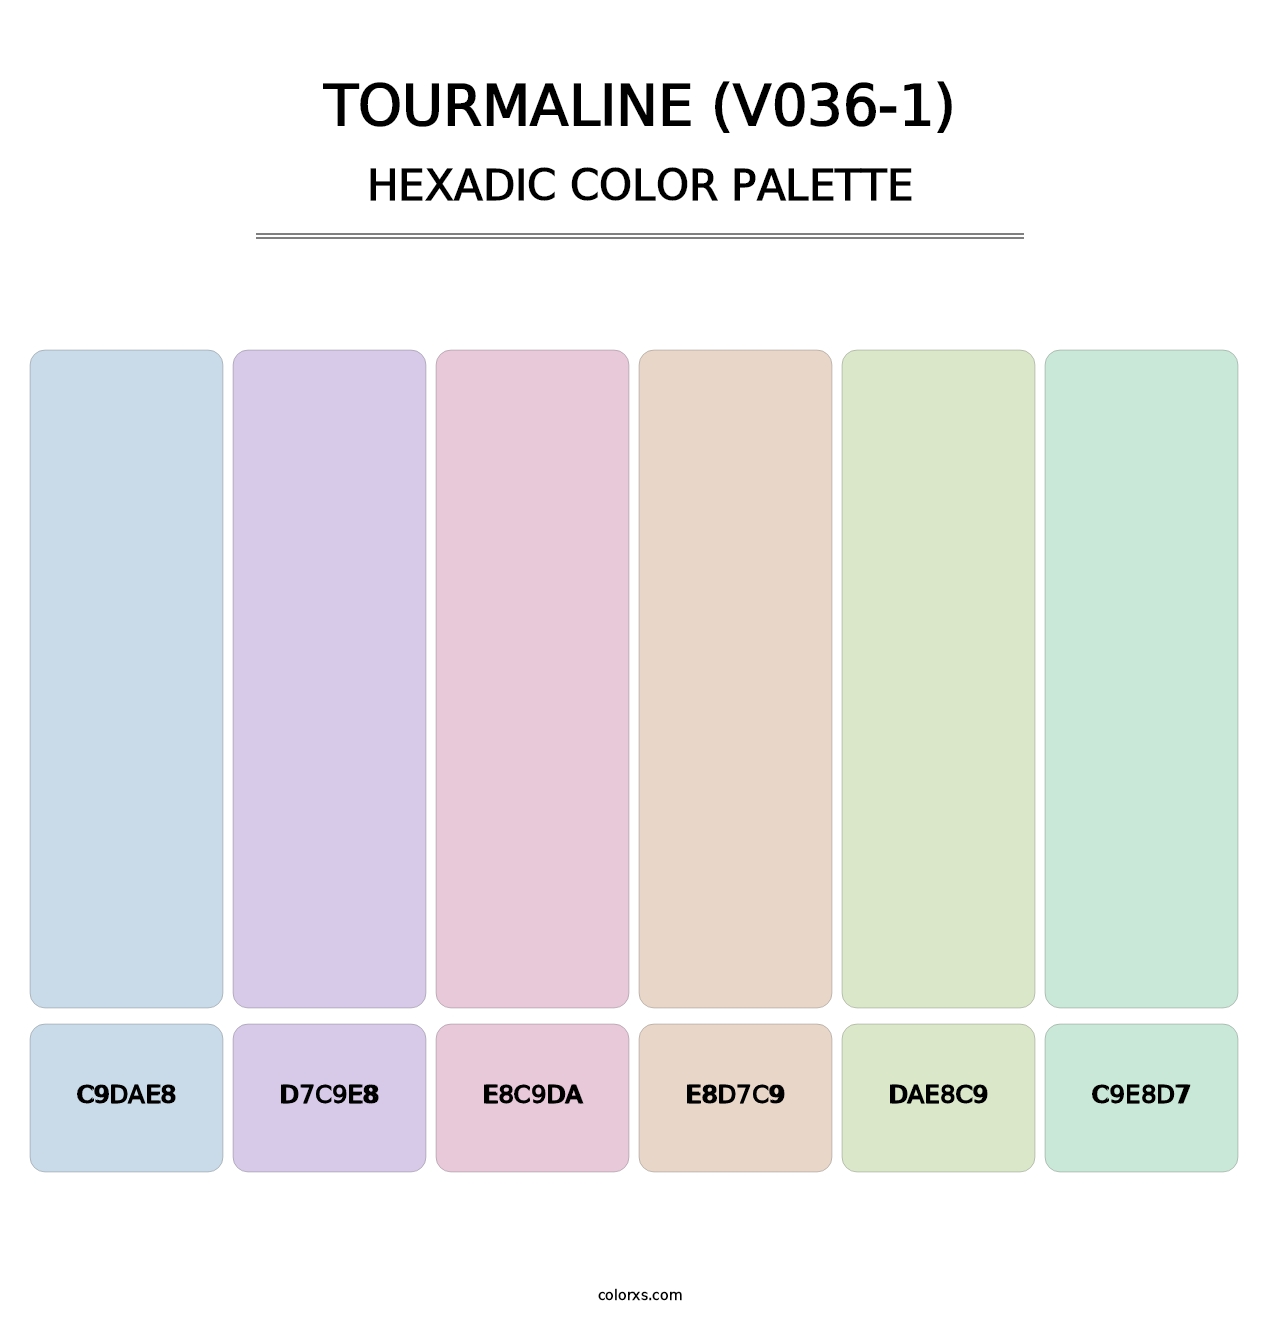 Tourmaline (V036-1) - Hexadic Color Palette